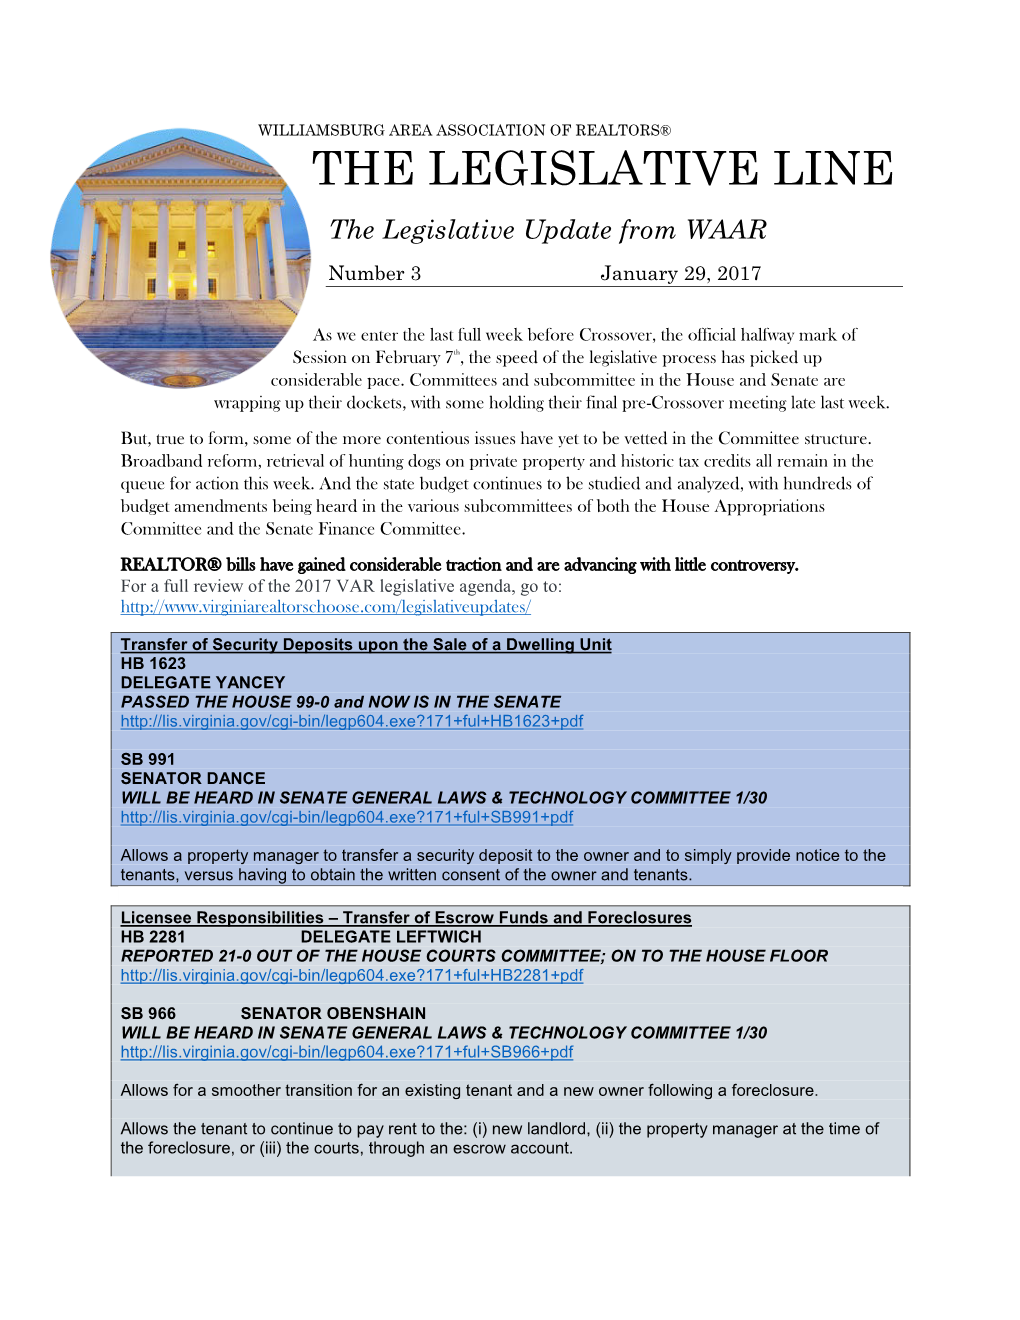 THE LEGISLATIVE LINE the Legislative Update from WAAR Number 3 January 29, 2017